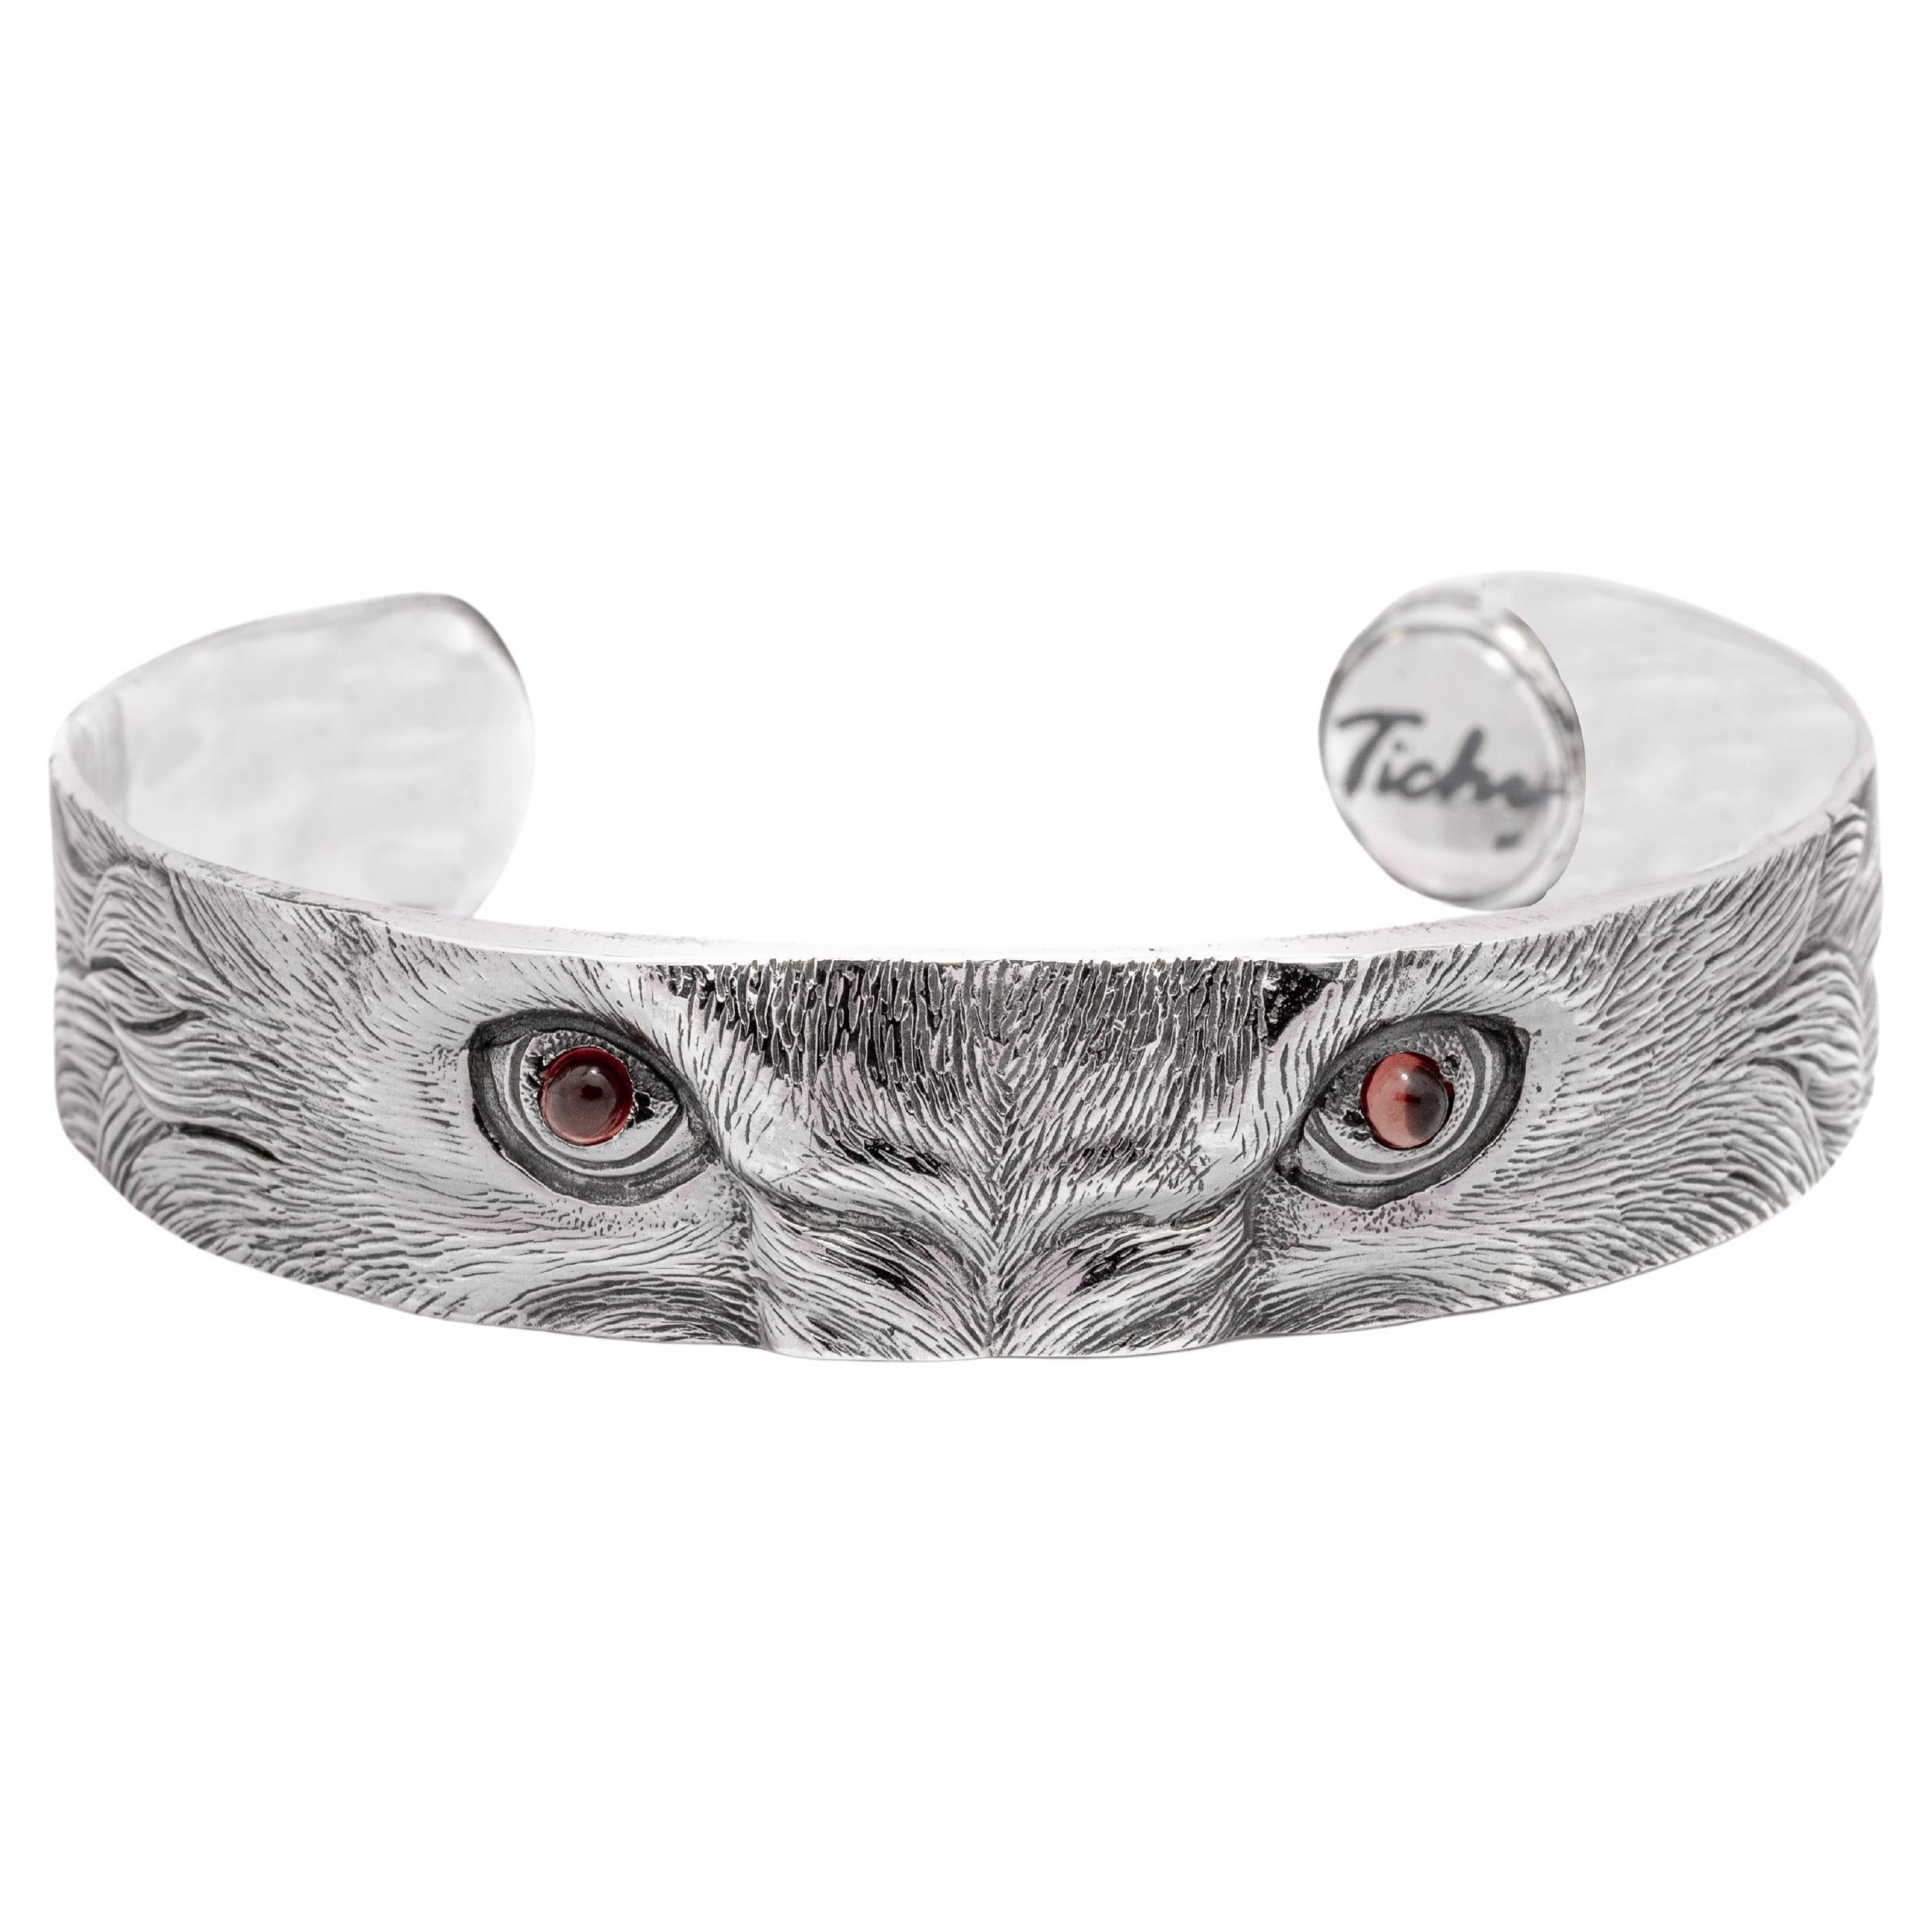 Tichu Citrine Lion Eyes Cuff in Sterling Silver and Crystal Quartz 'Size M'